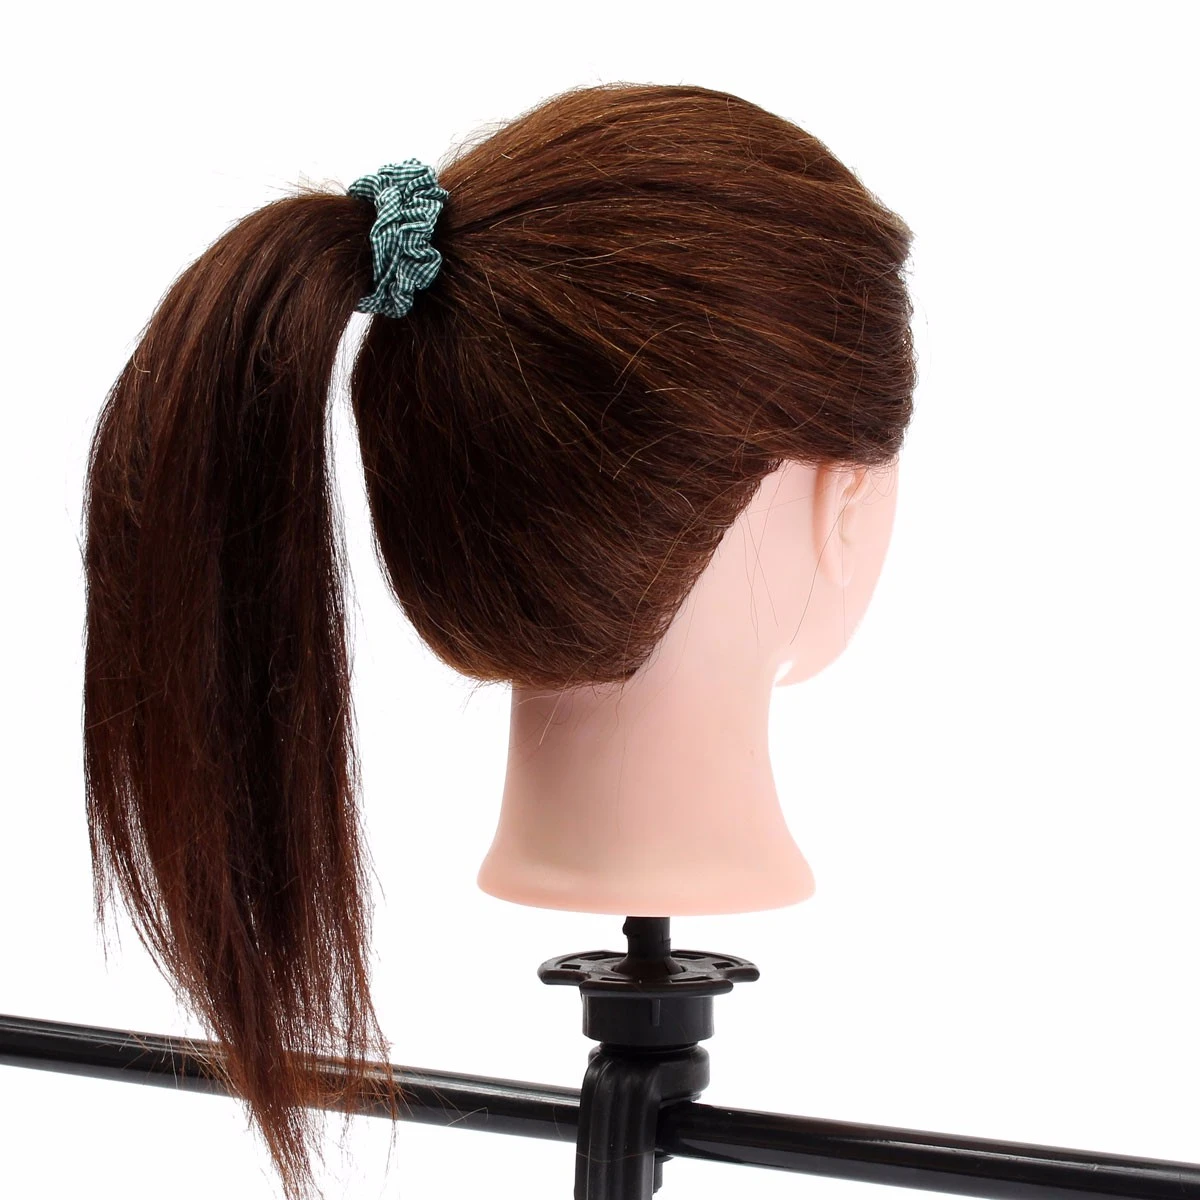 20 Brown 90% Human Hair Hairdressing Training Head Mannequin Model Braiding Practice Salon Clamp